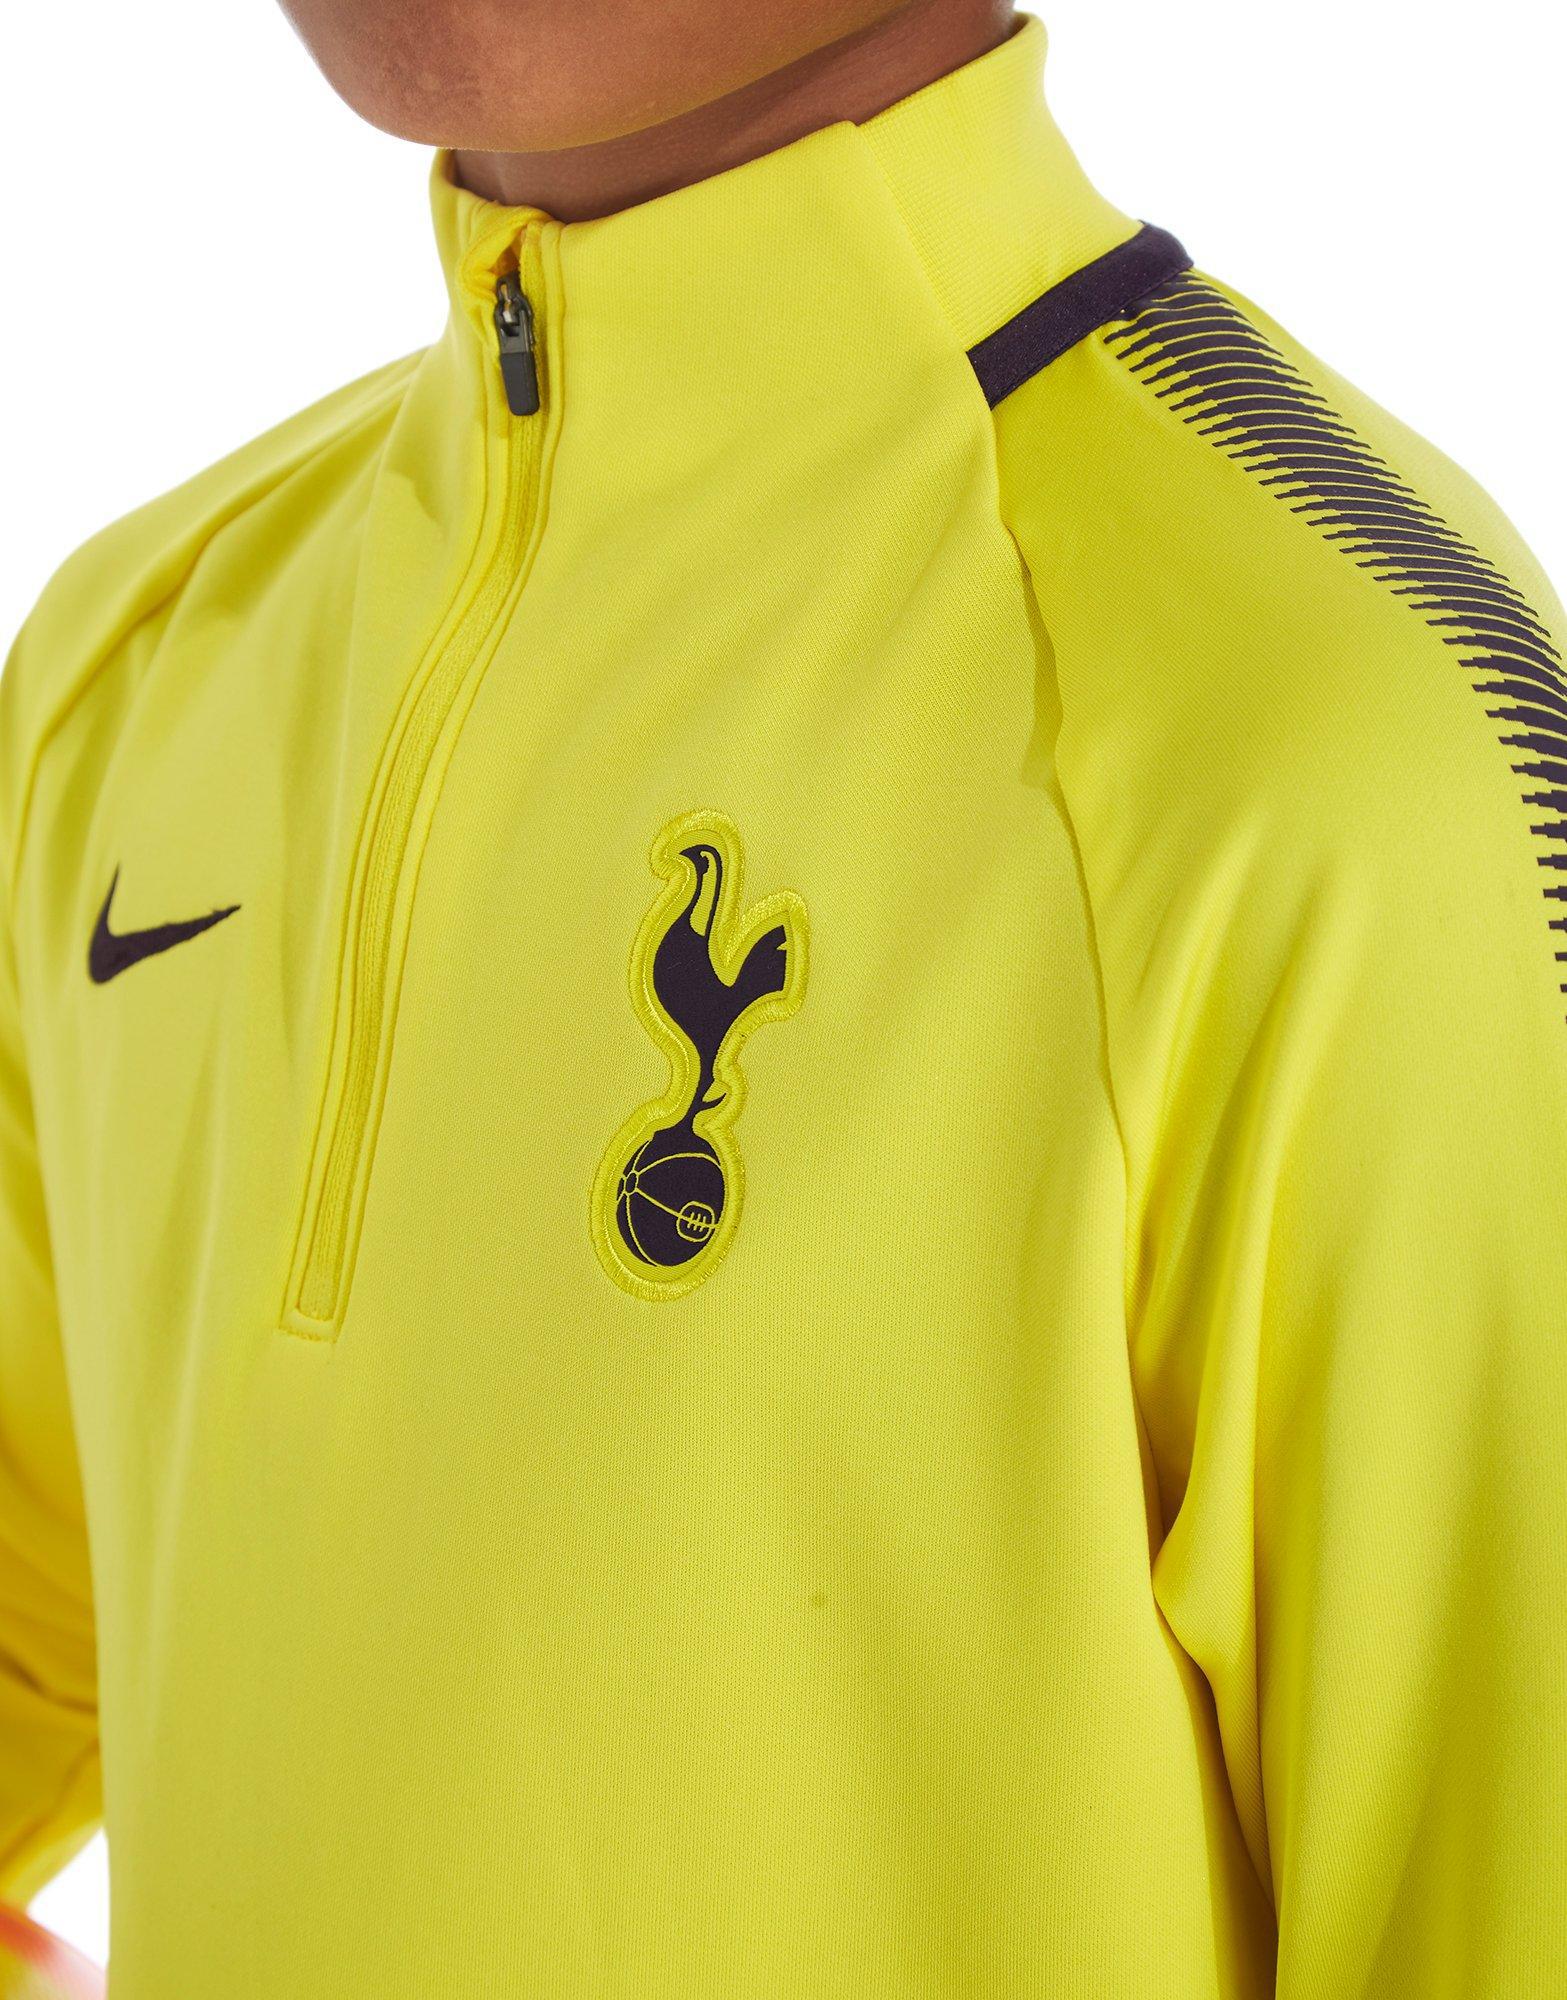 Tottenham Yellow : Tottenham Hotspur 2020-21 Nike Training Kit | The ...